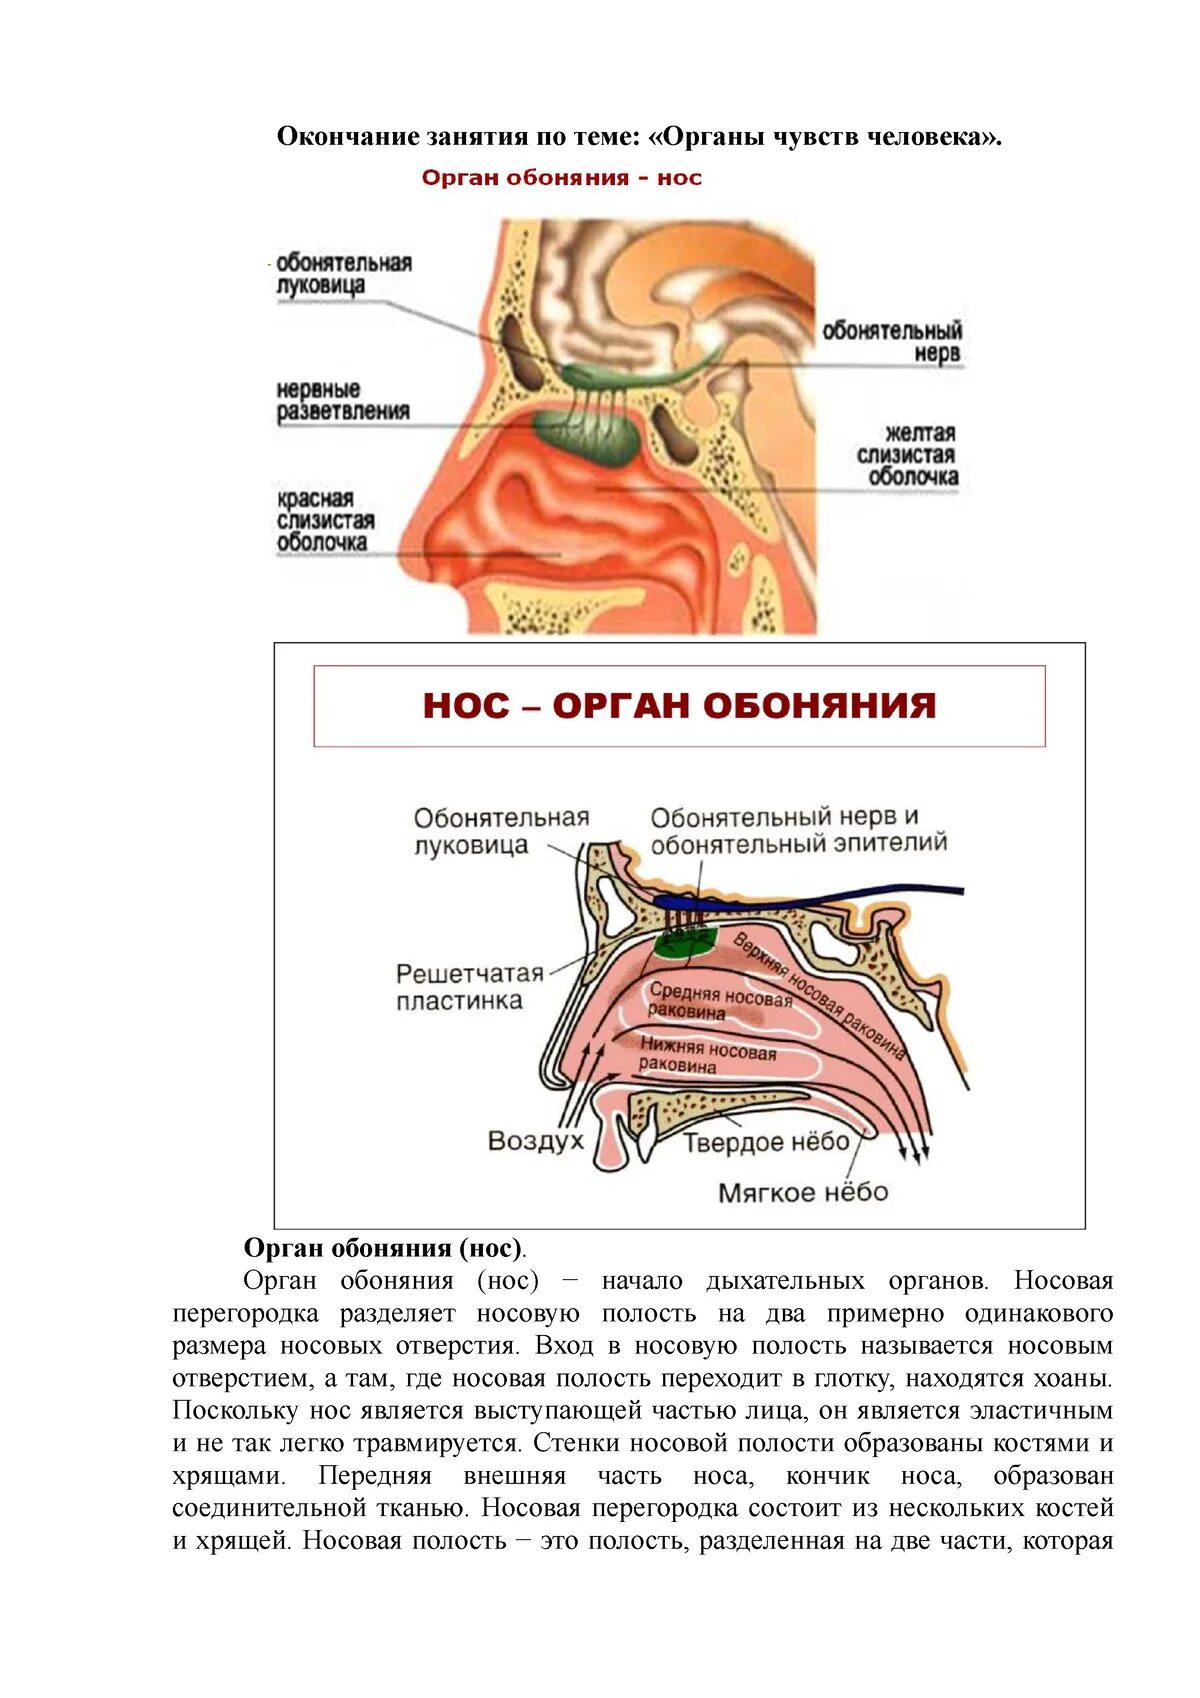 Обоняние анатомия. Нос орган обоняния. Орган обоняния анатомия. Строение органа обоняния человека.